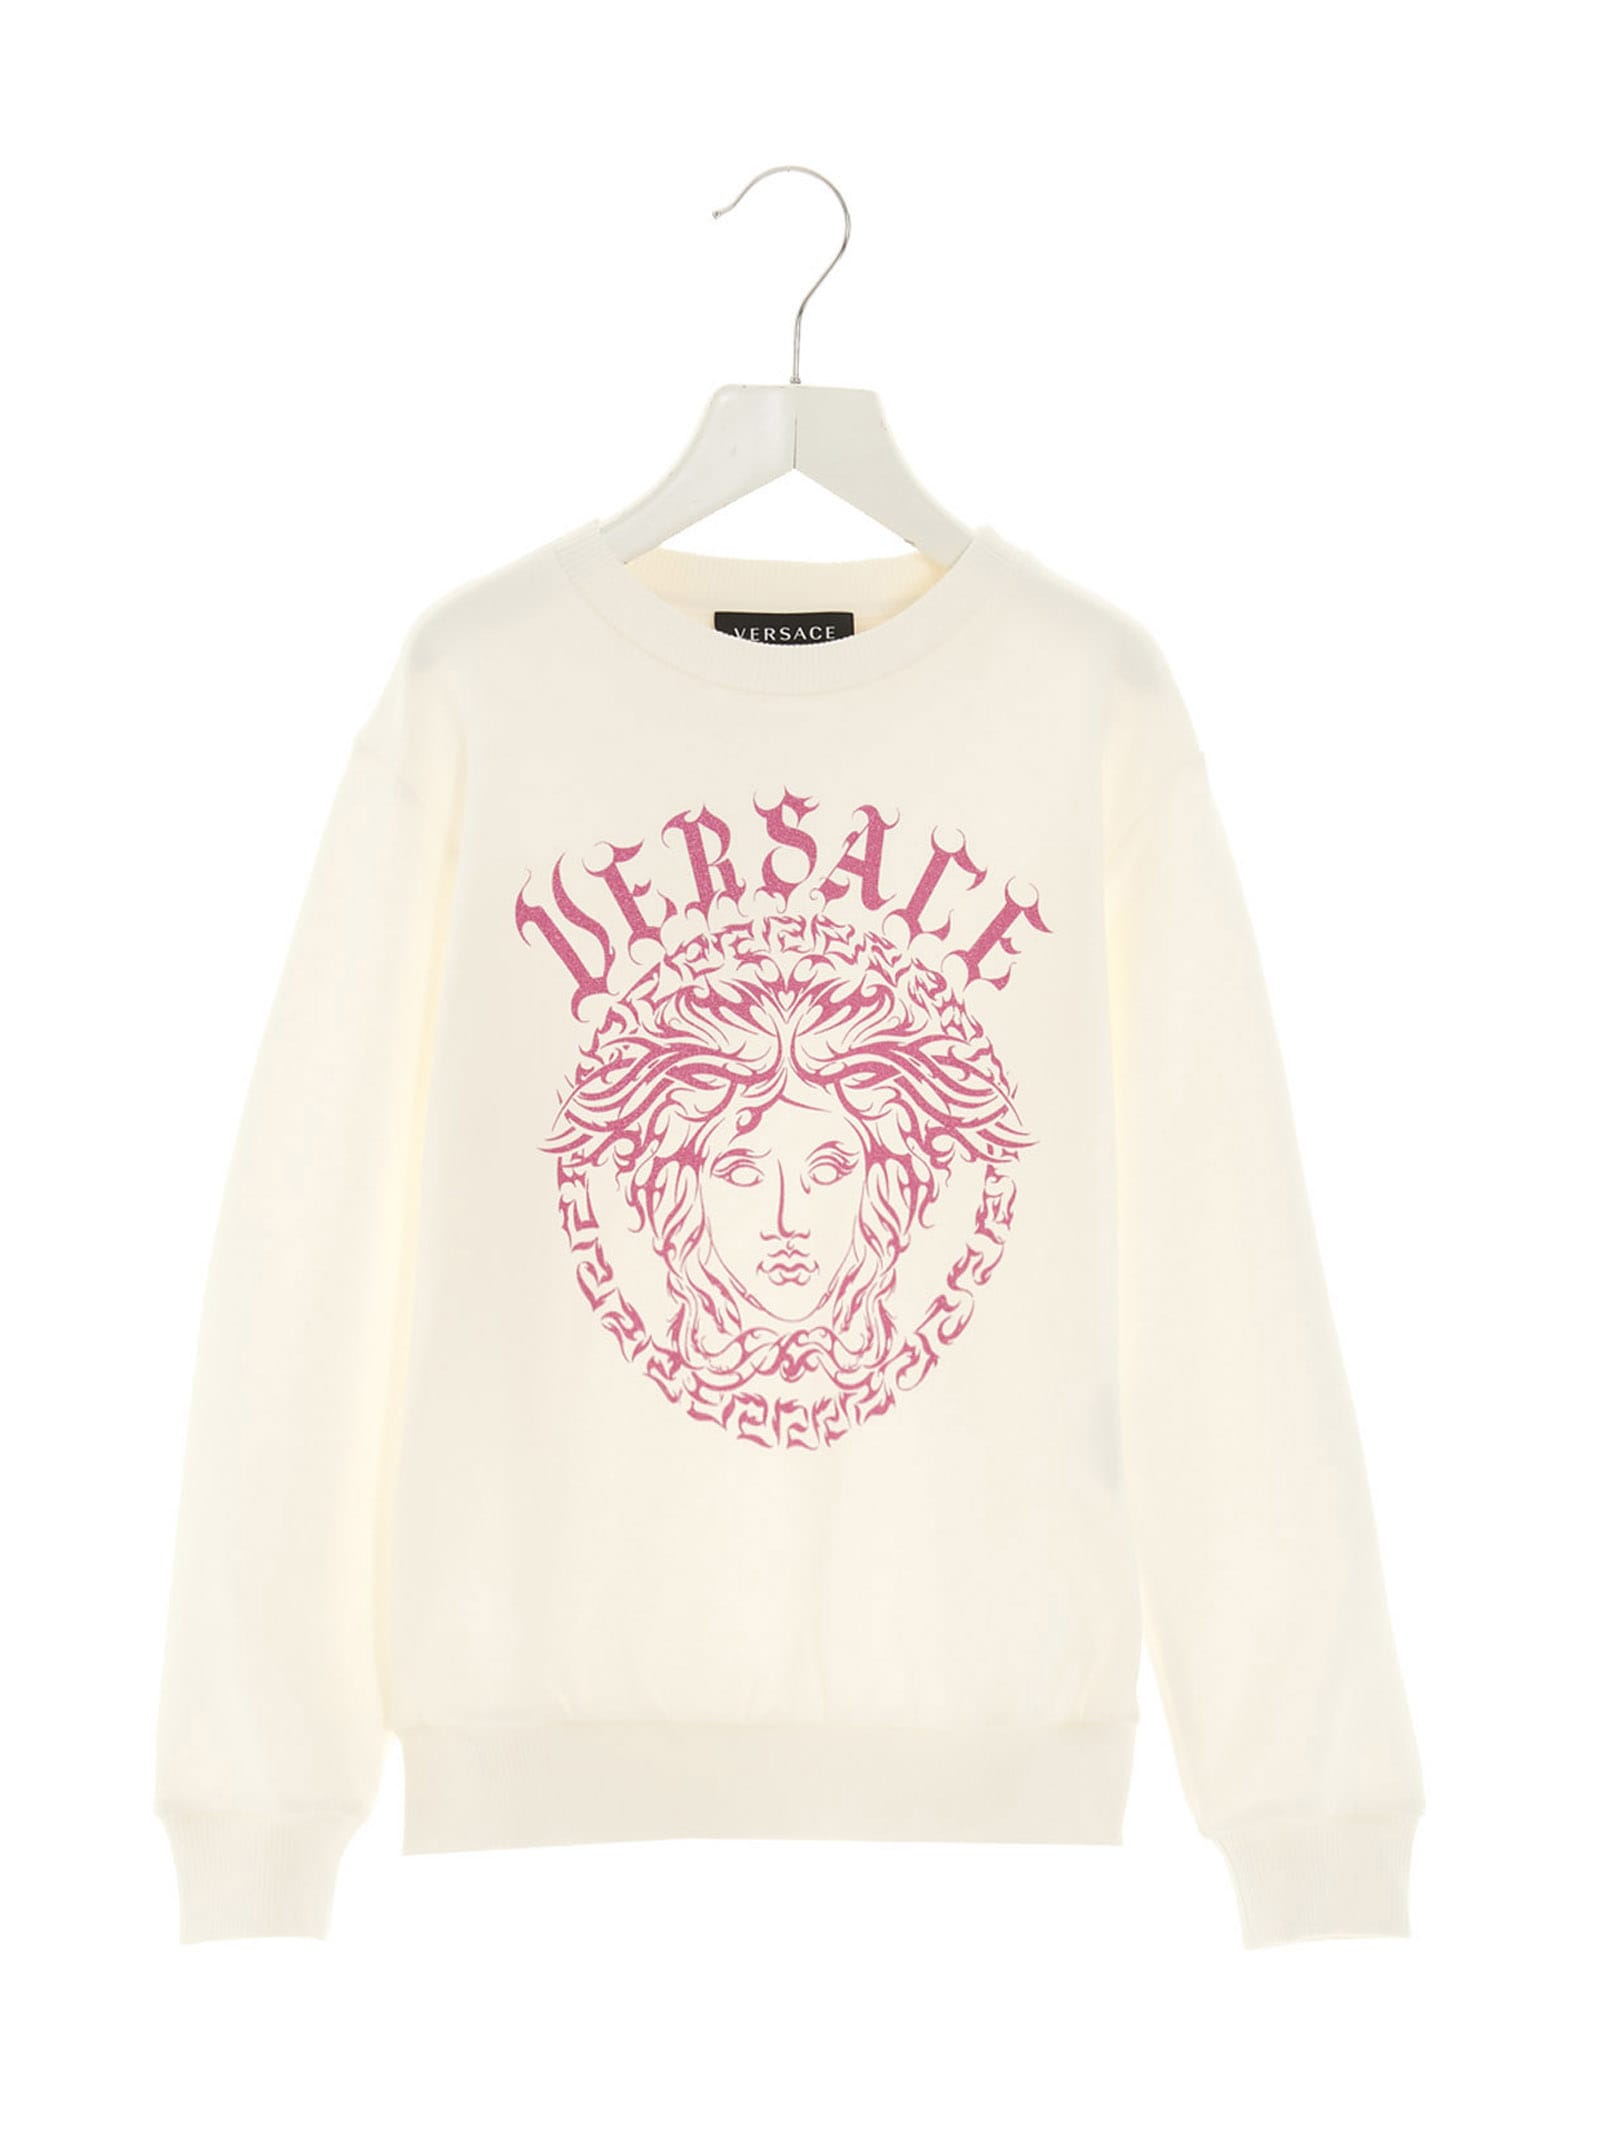 Versace Logo Print Sweatshirt